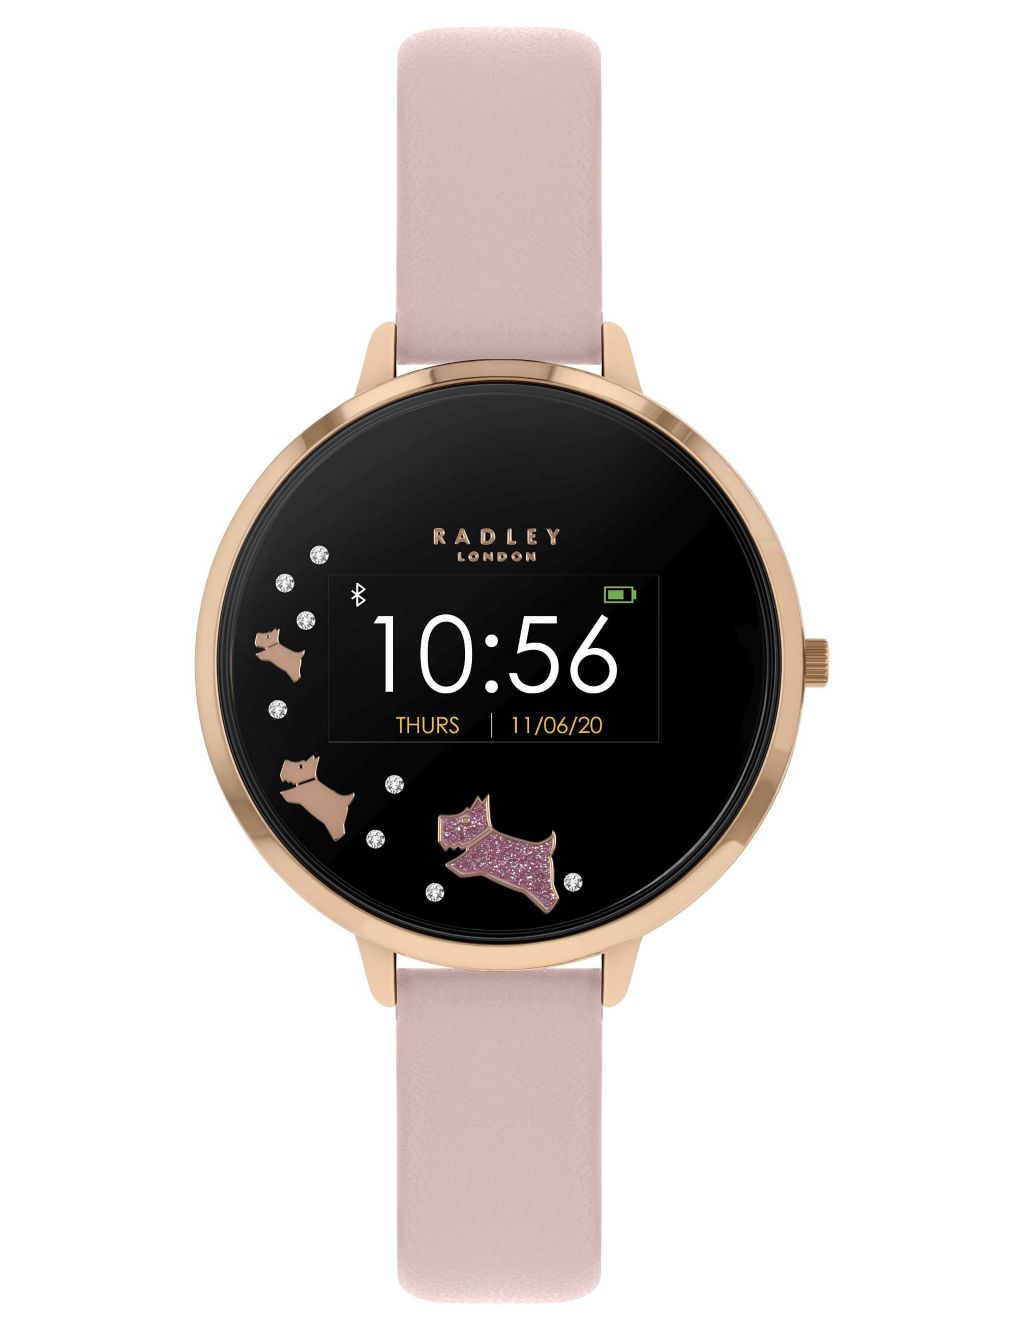 Radley Series 3 Activity Tracker Smartwatch image 1